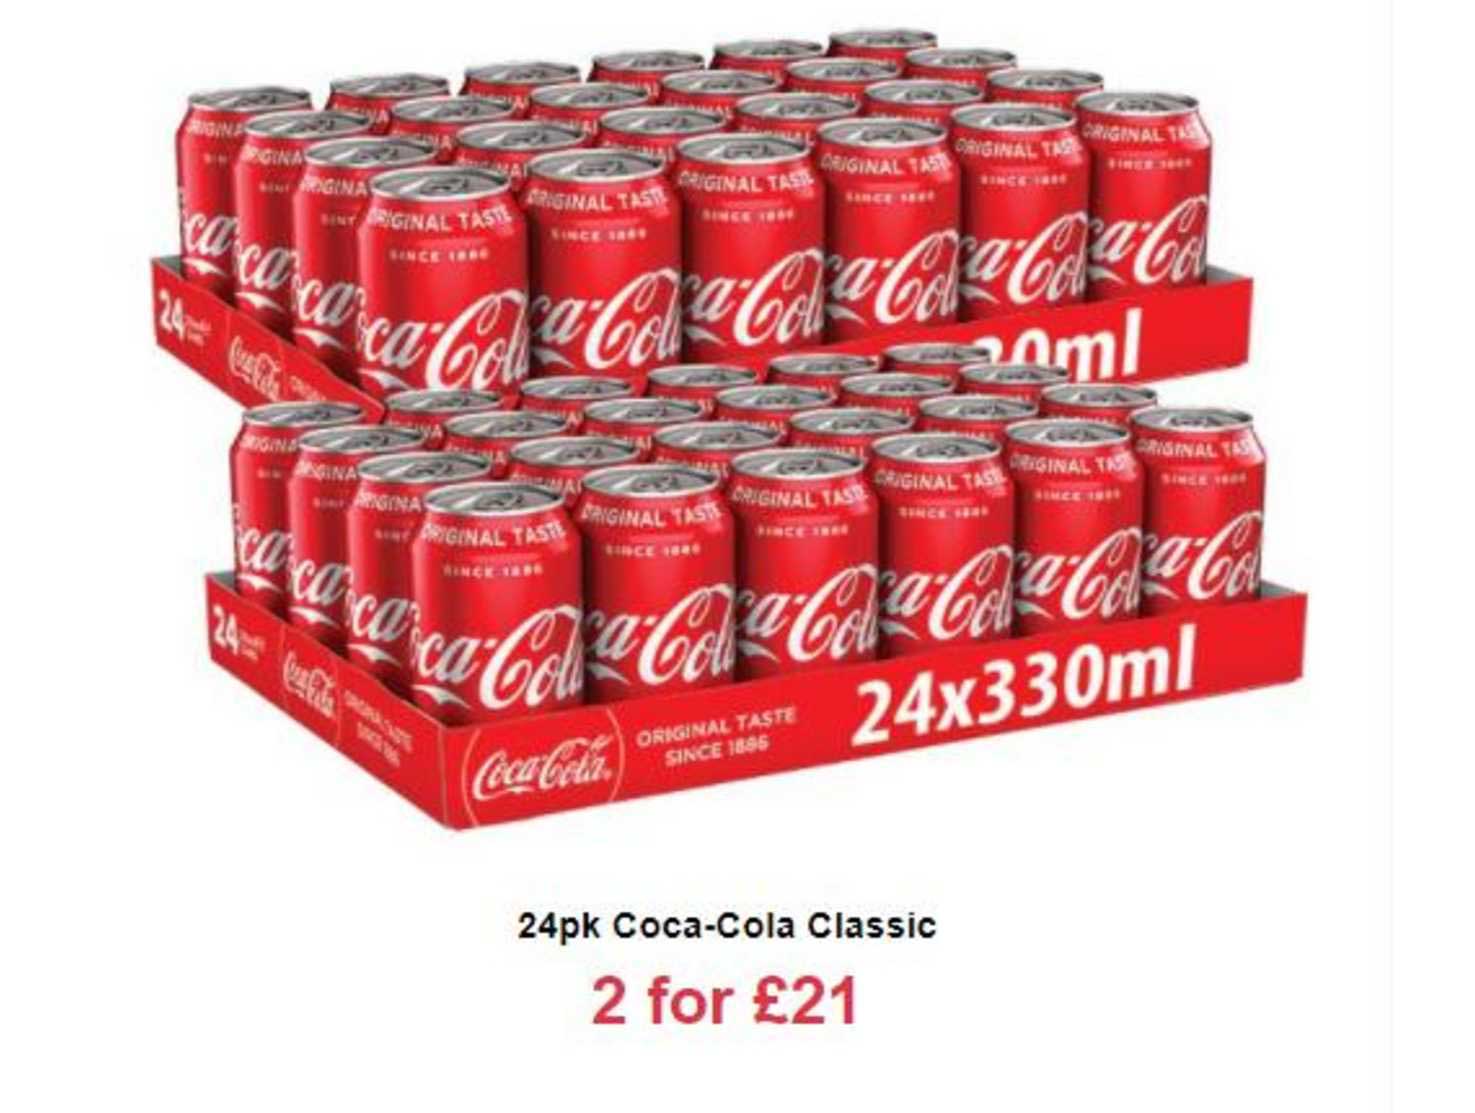 coca cola offers farmfoods